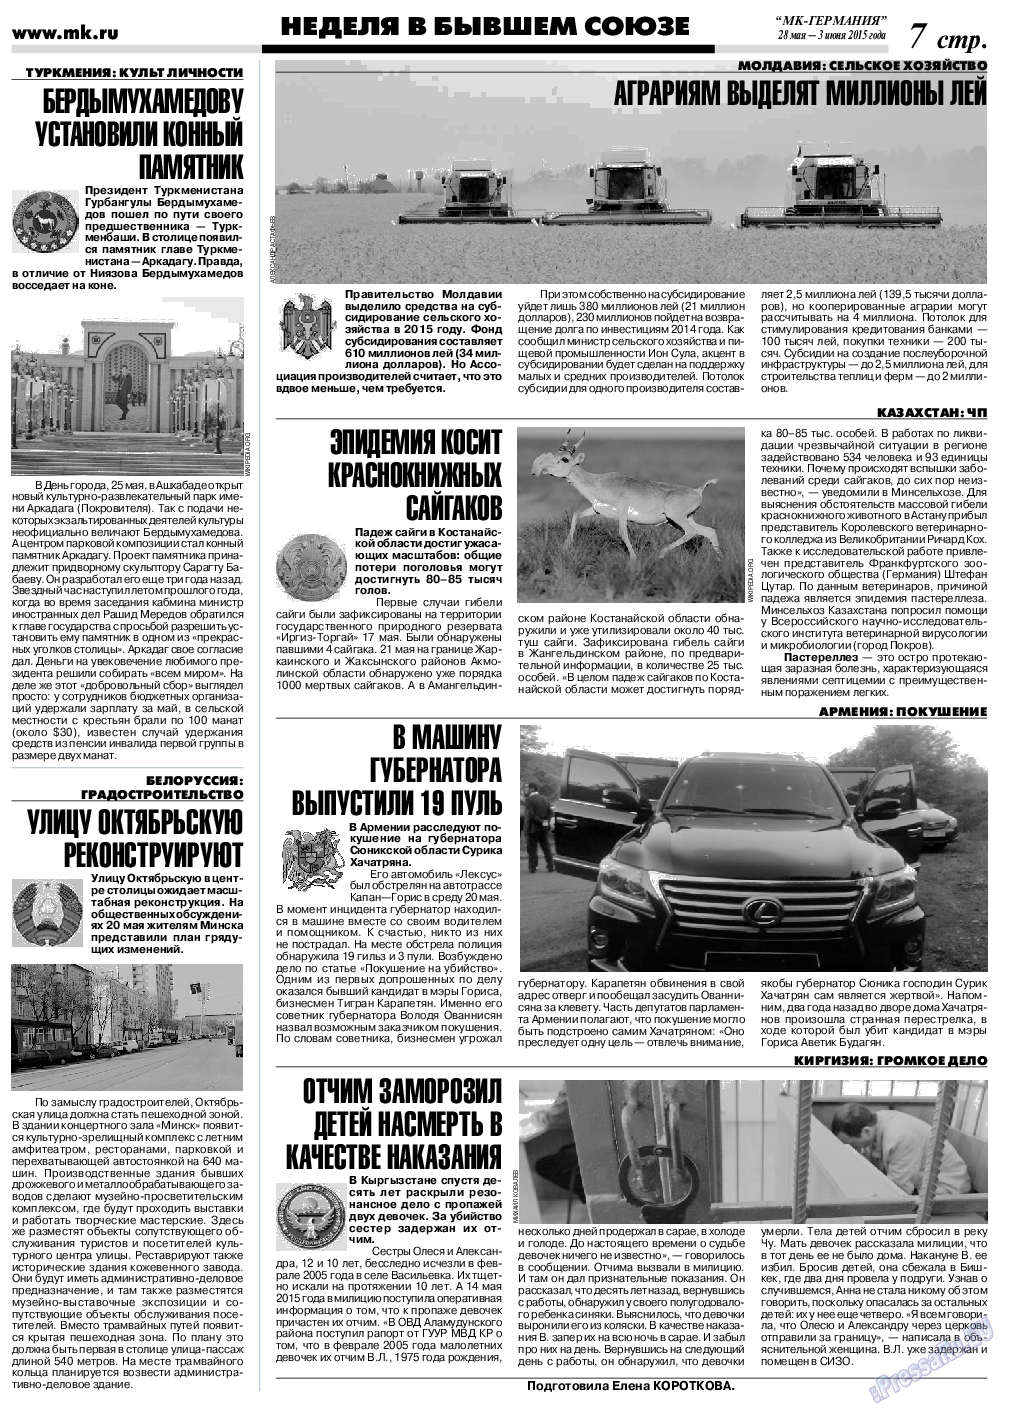 МК-Германия, газета. 2015 №22 стр.7